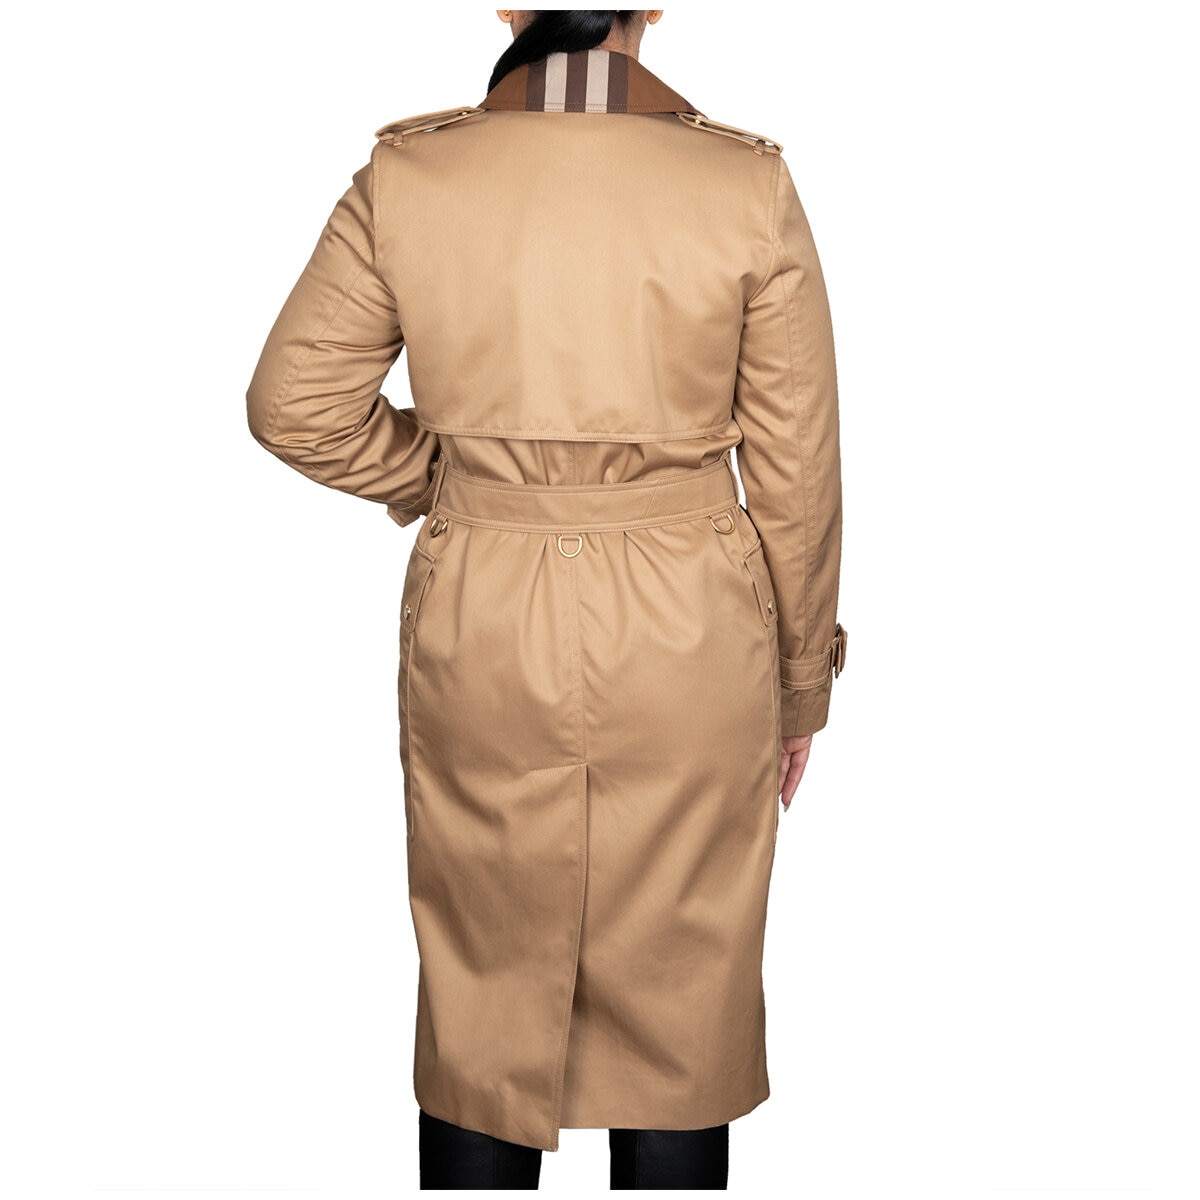 Burberry Women's Sandridge Trench Coat